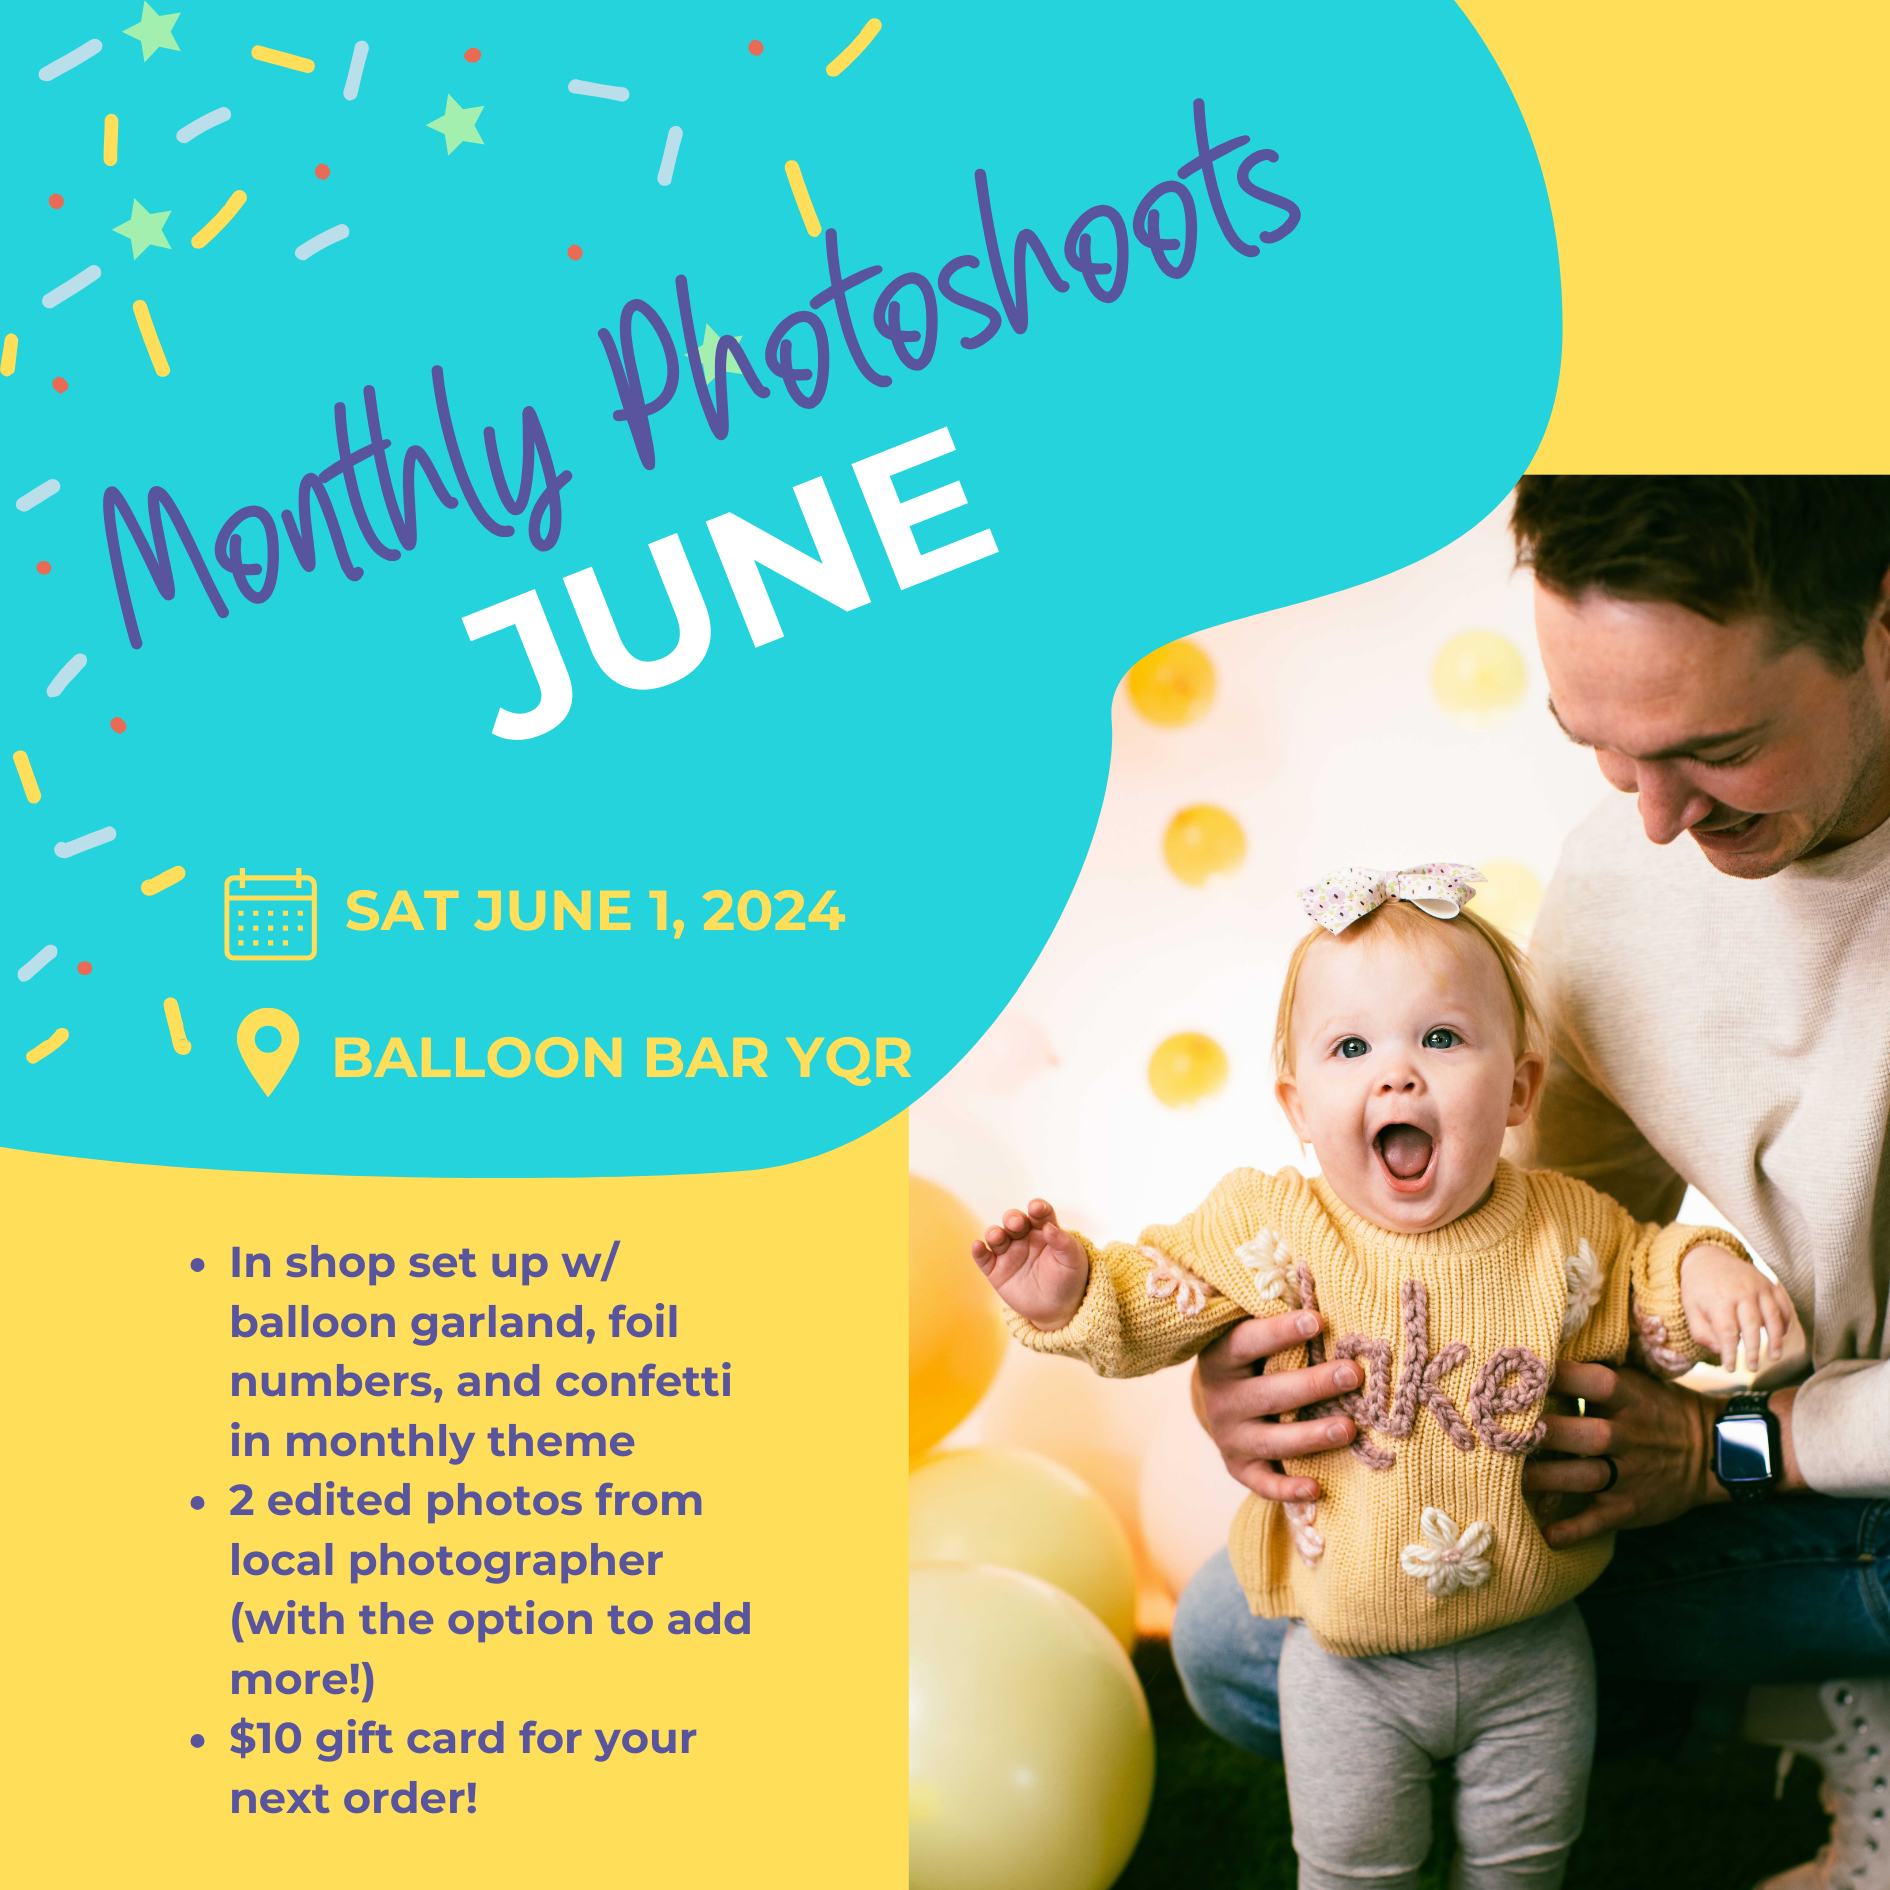 Monthly Photoshoot - Saturday June 1, 2024